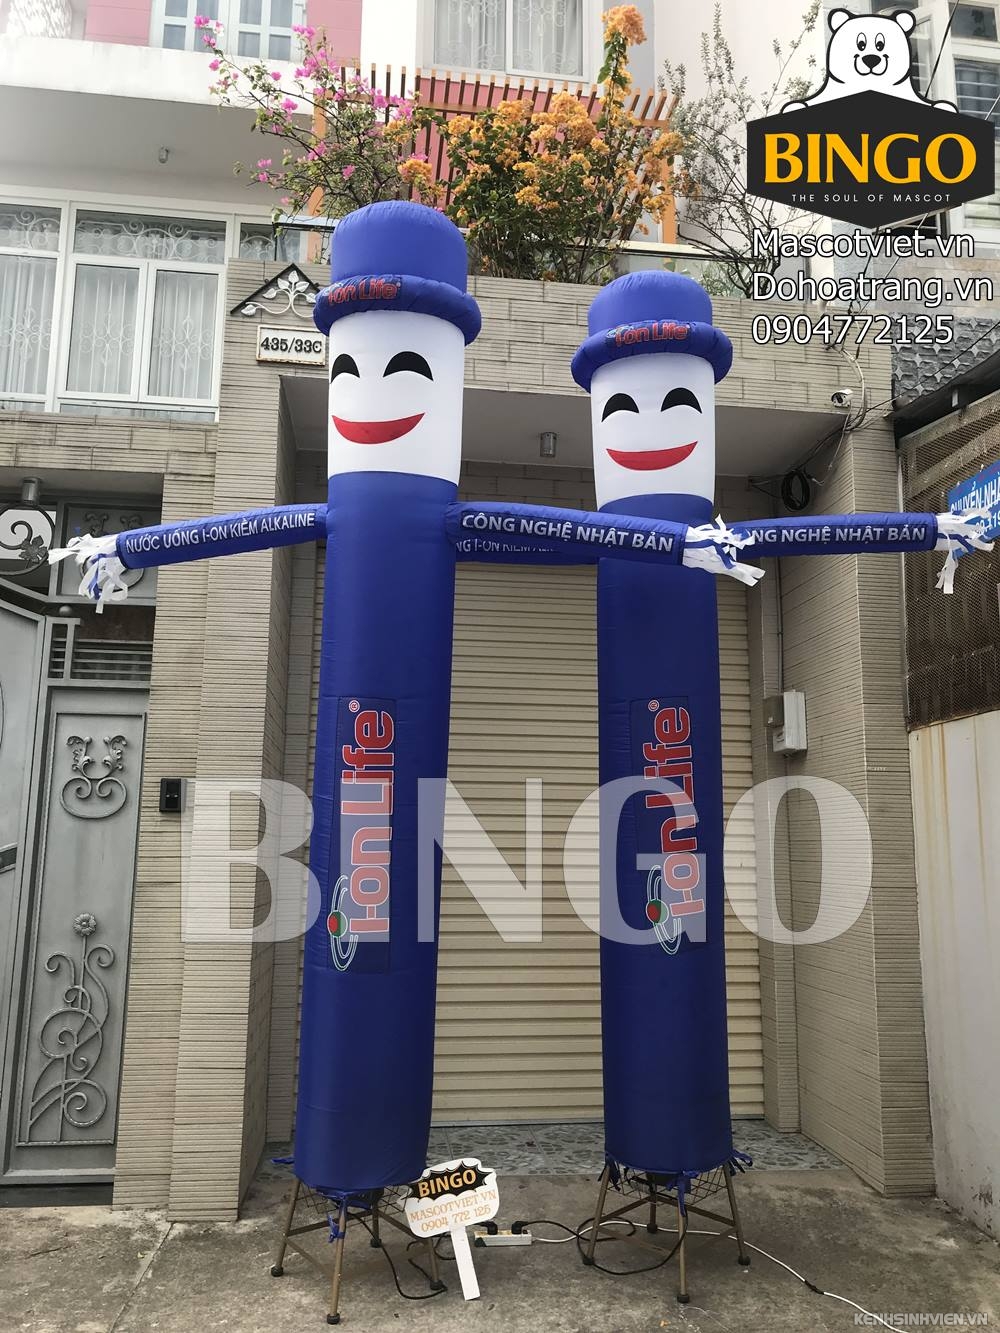 mo-hinh-hoi-roi-hoi-mascot-bingo-0904772125-2-.jpg